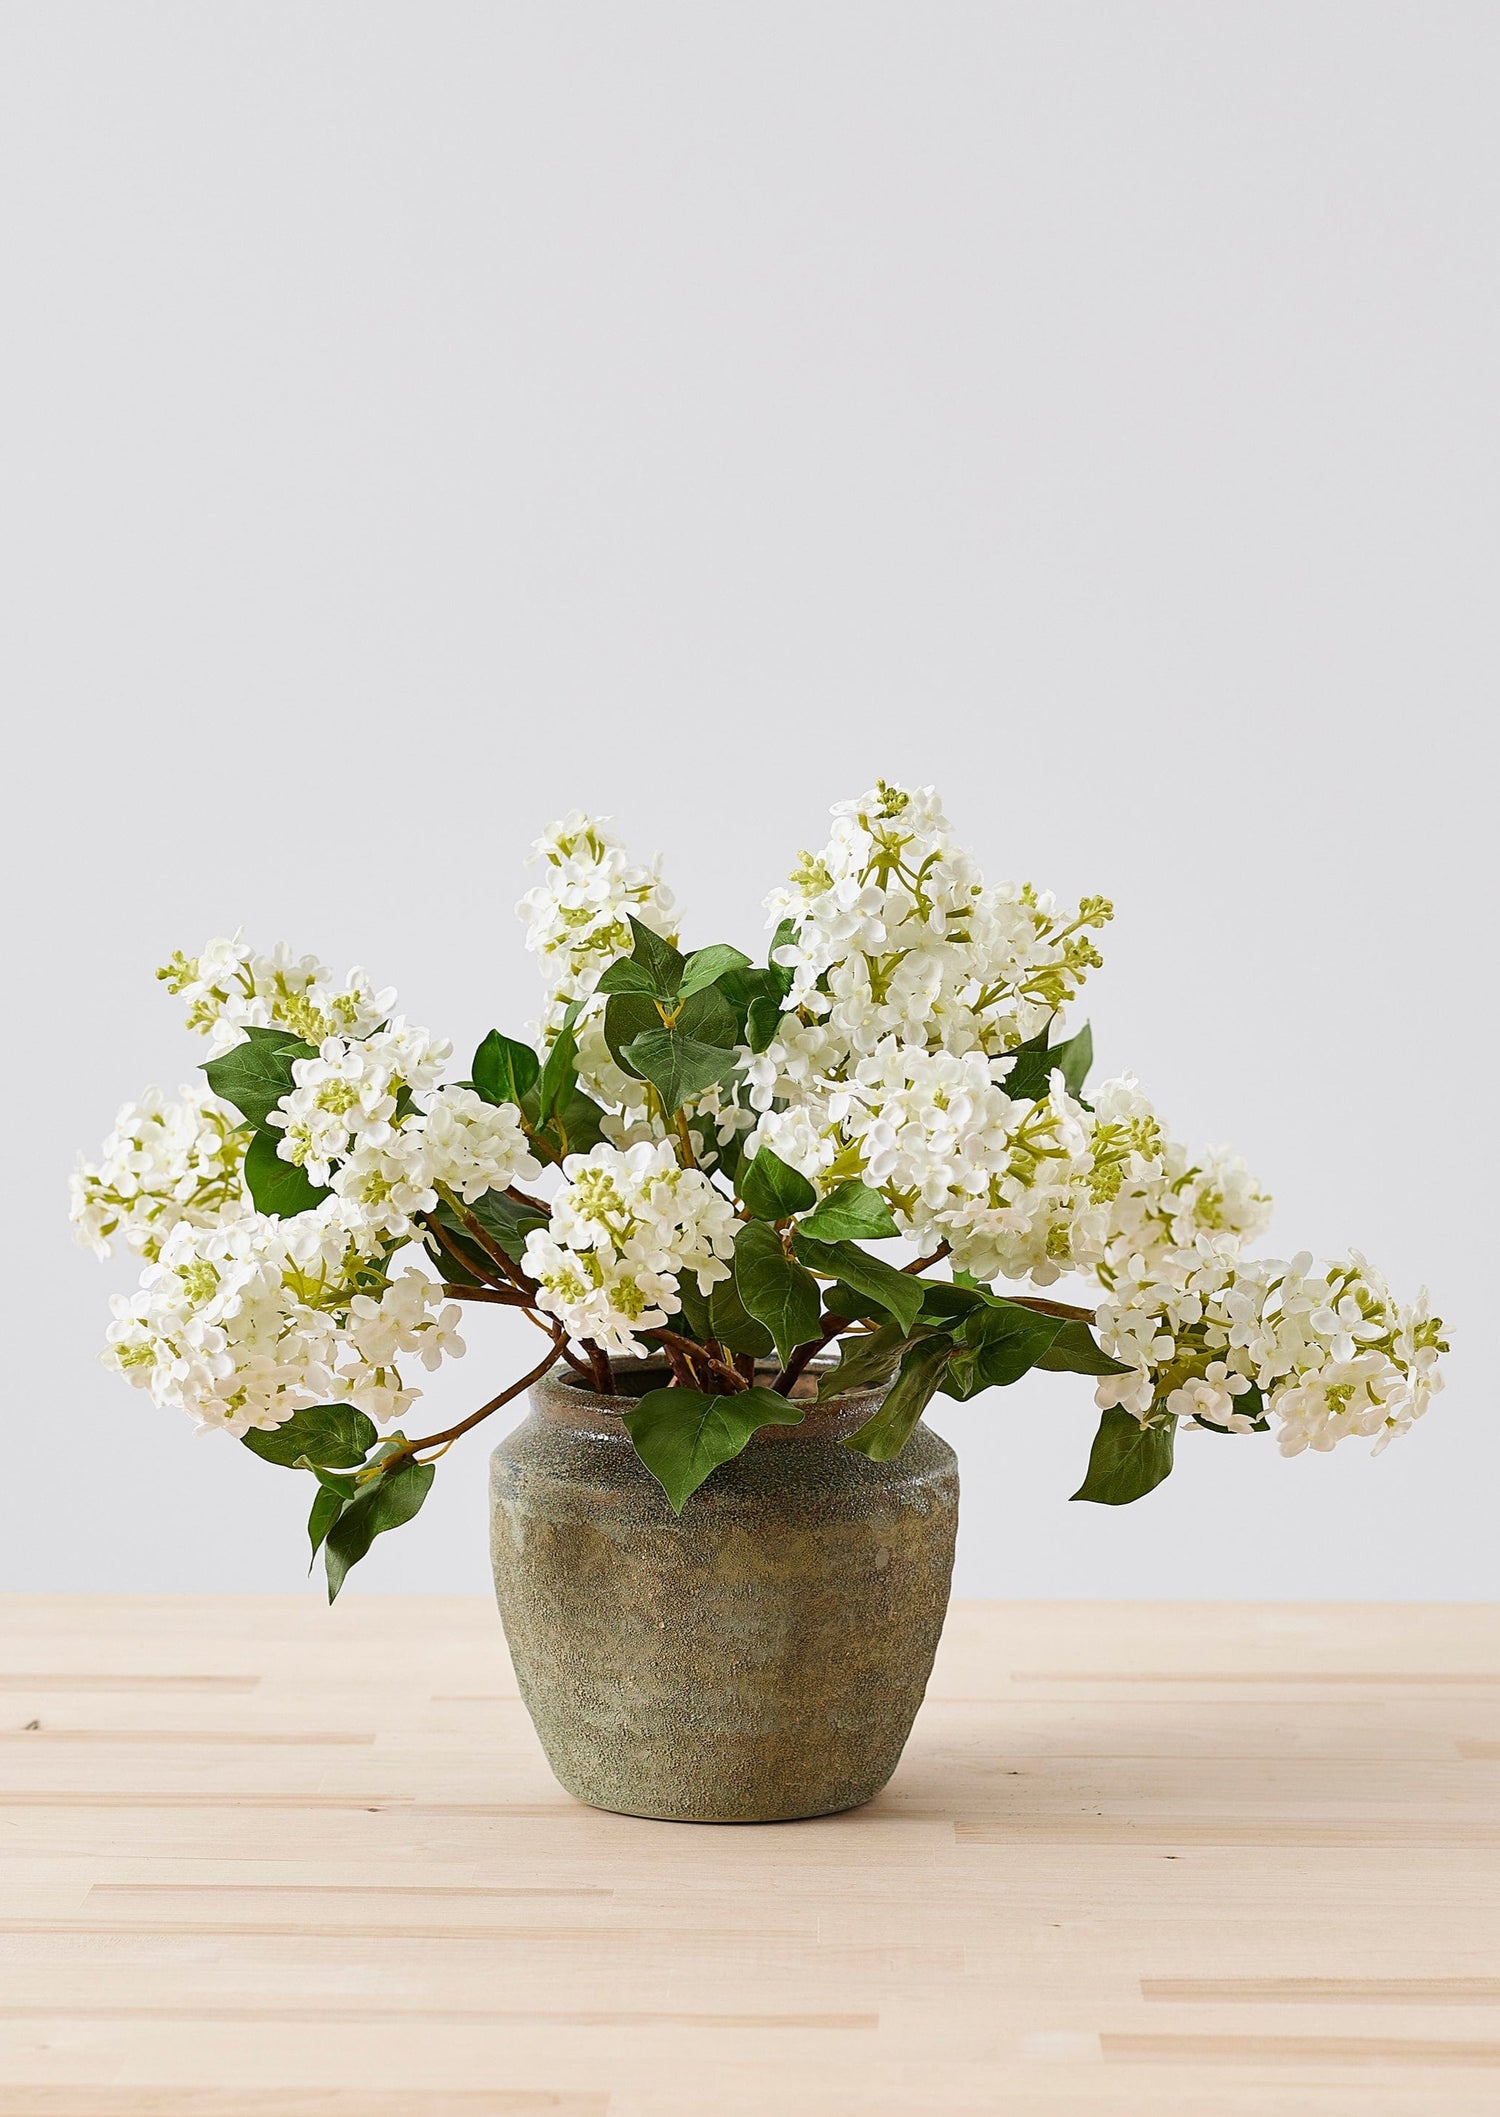 Flower Arrangements 101: A Crash Course for Easy and Elegant